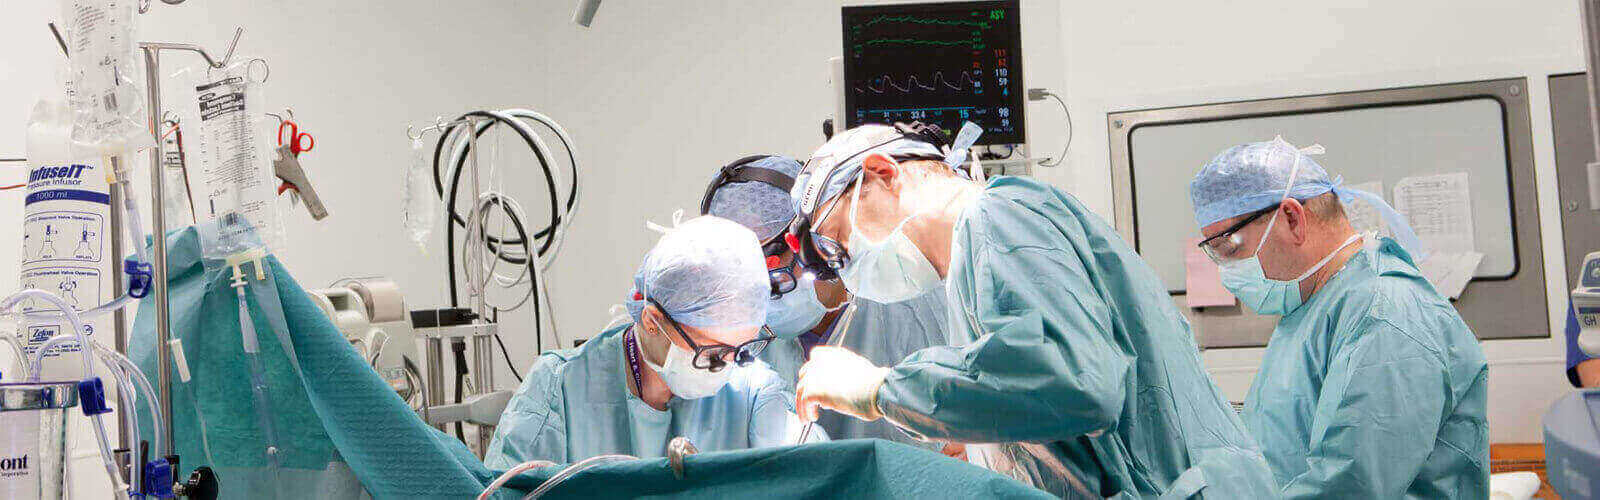 Heart Surgery Or Cardiac Surgery in New Zealand